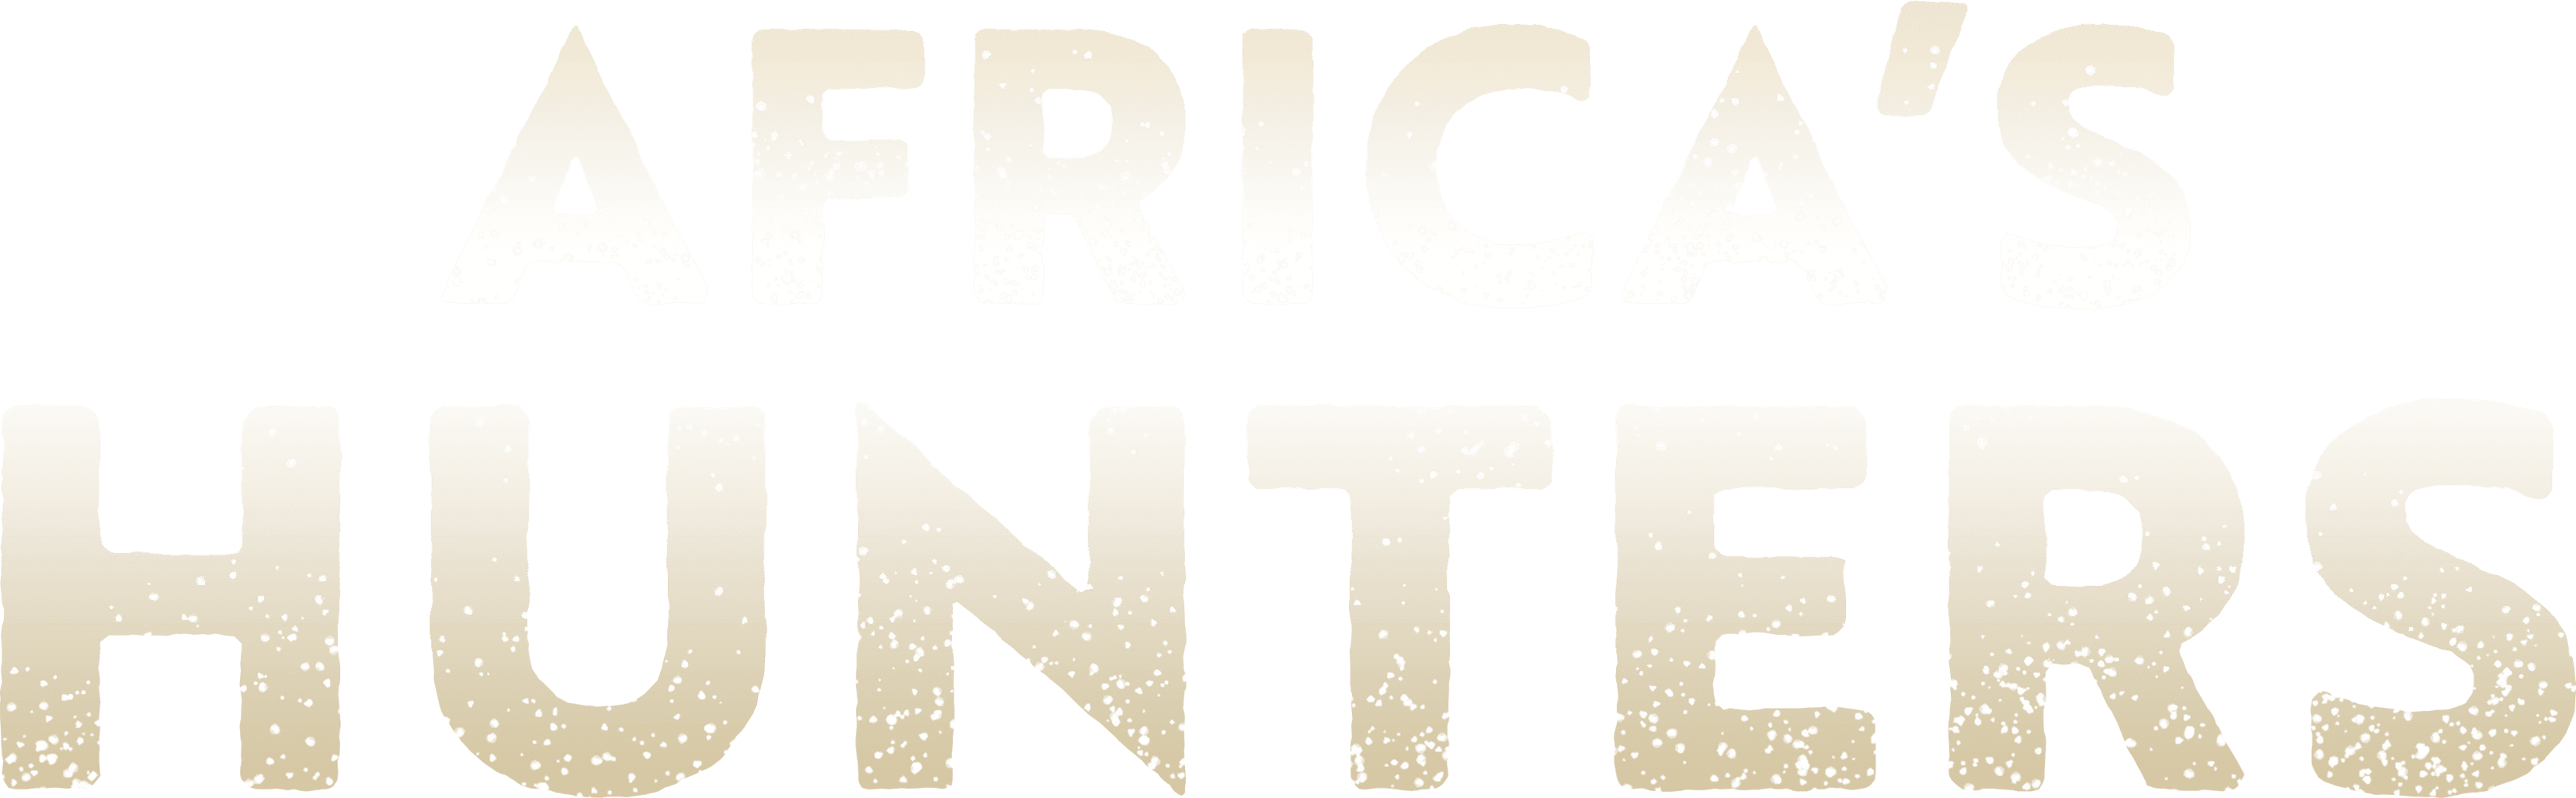 Africa's Hunters logo